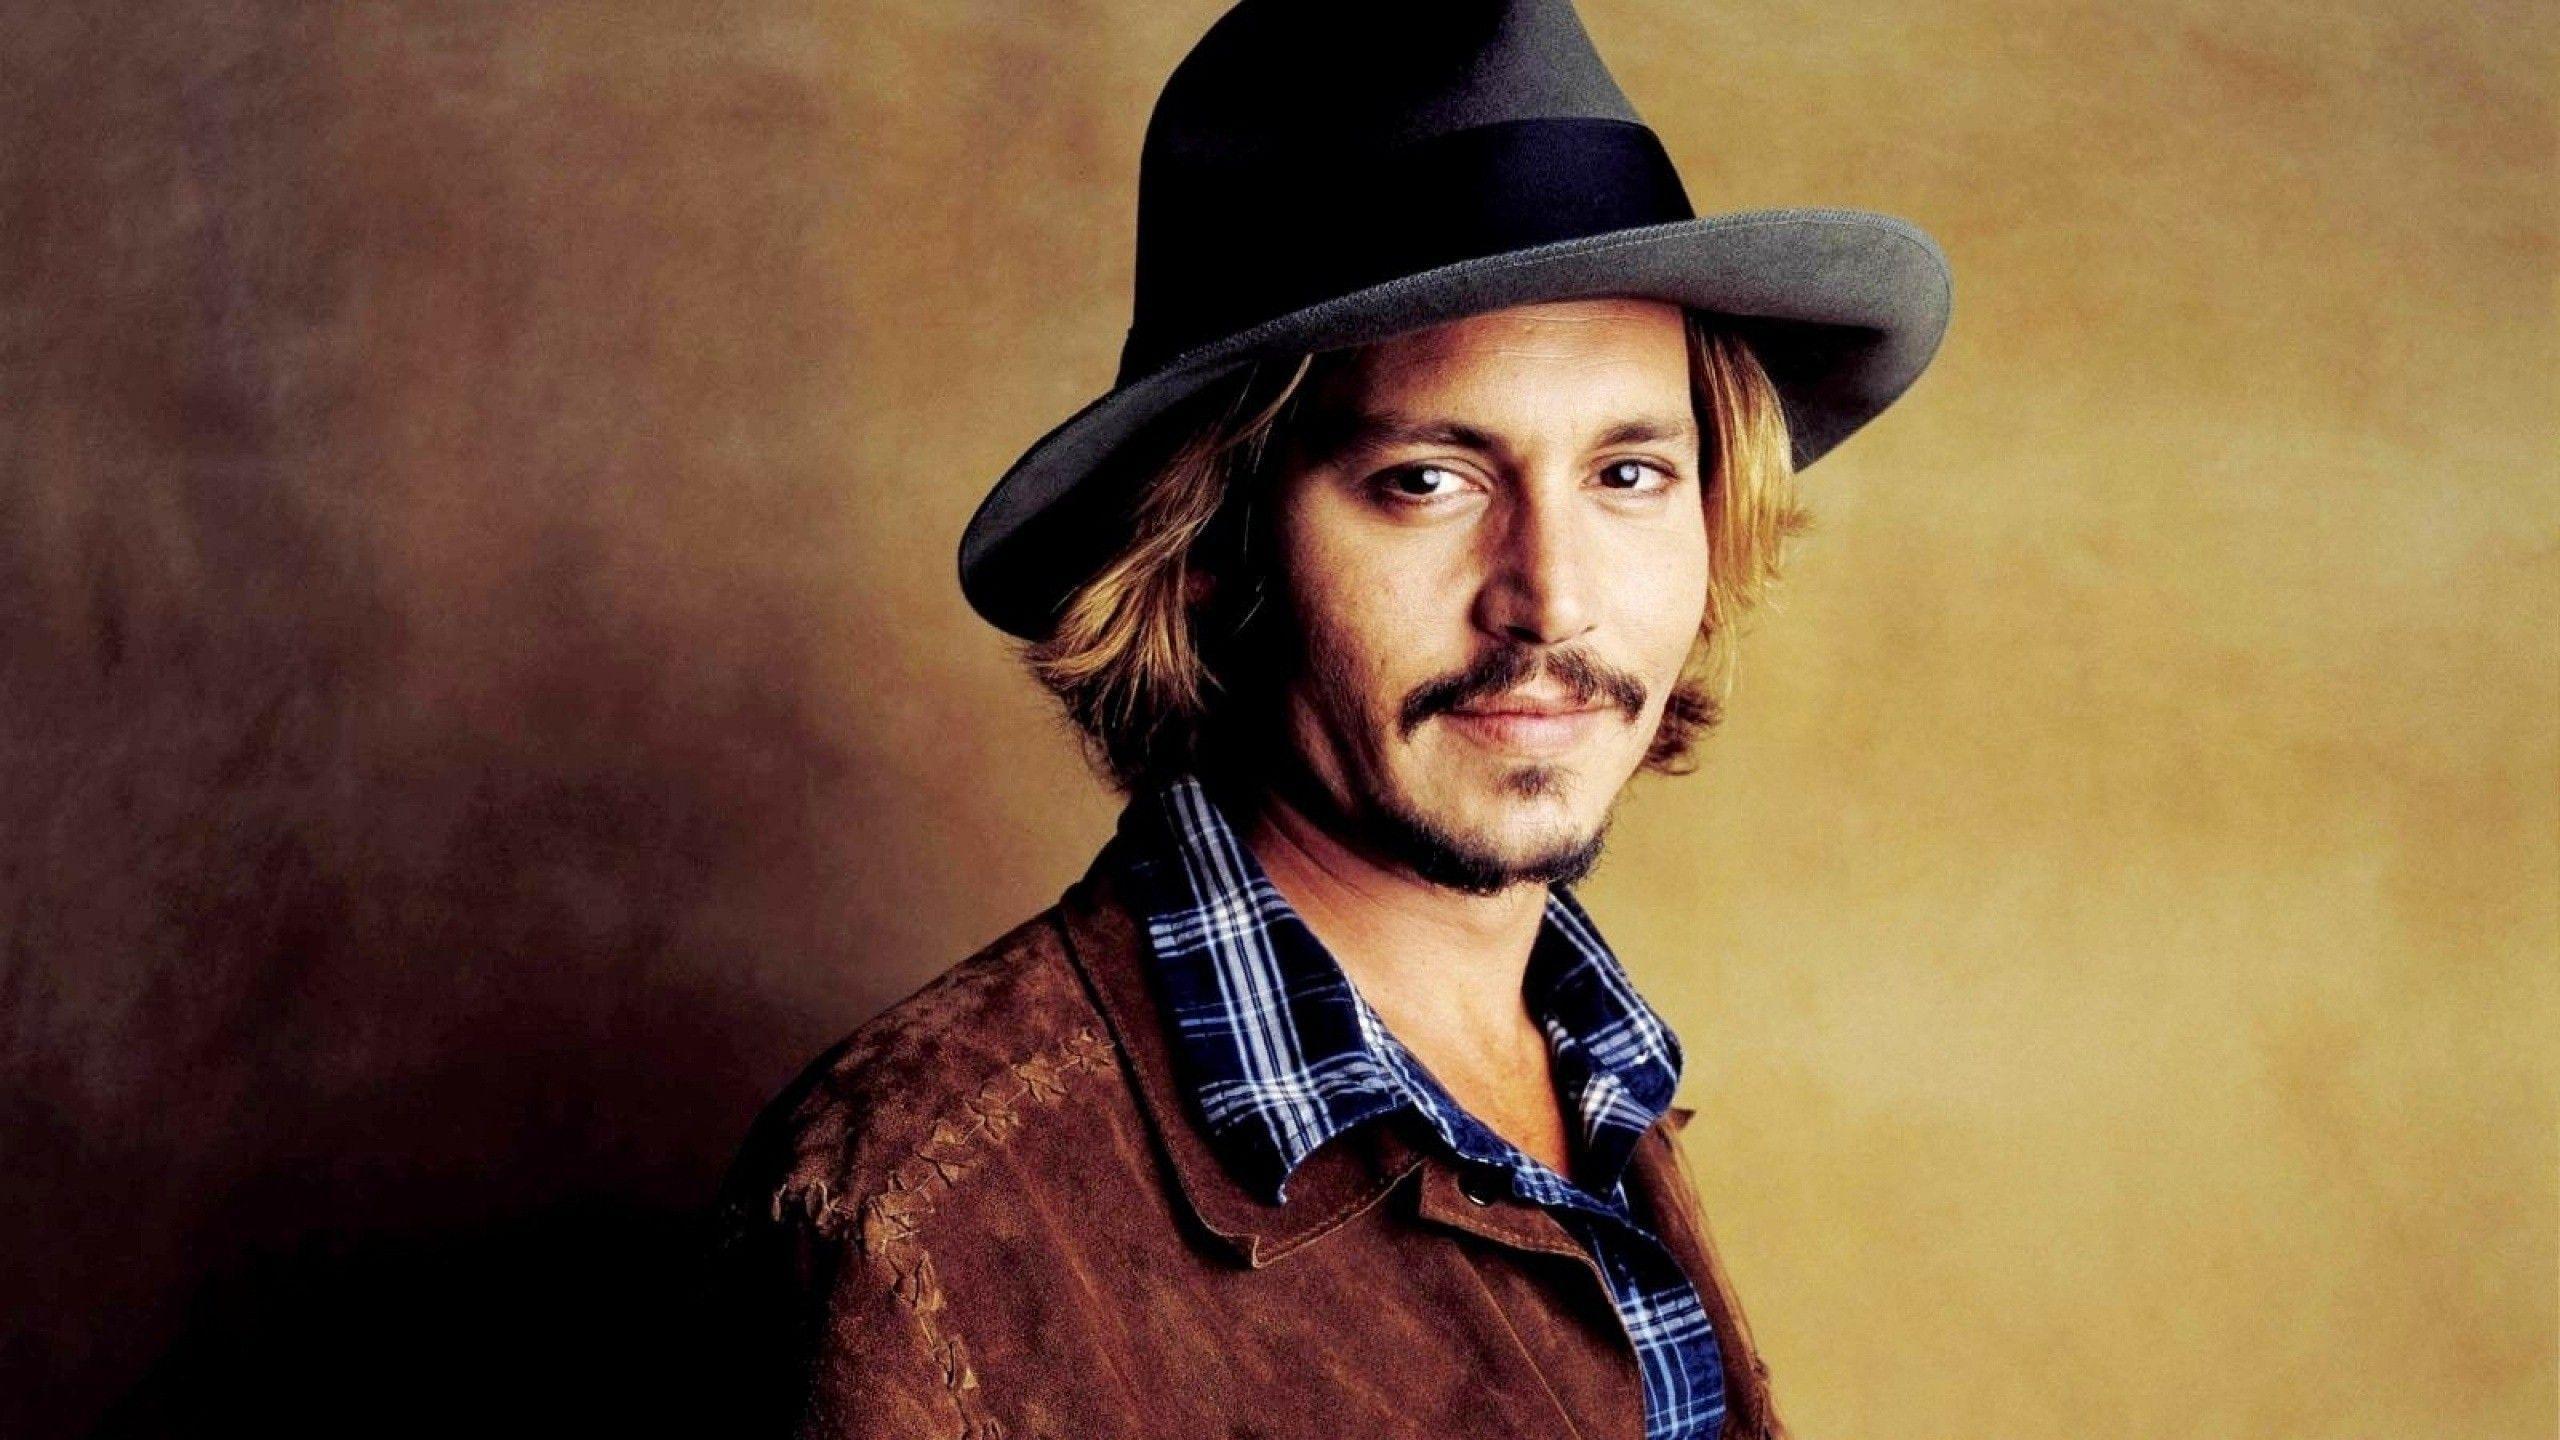 Johnny Depp HD Photo. Movie Celebrity Actor Wallpaper Image